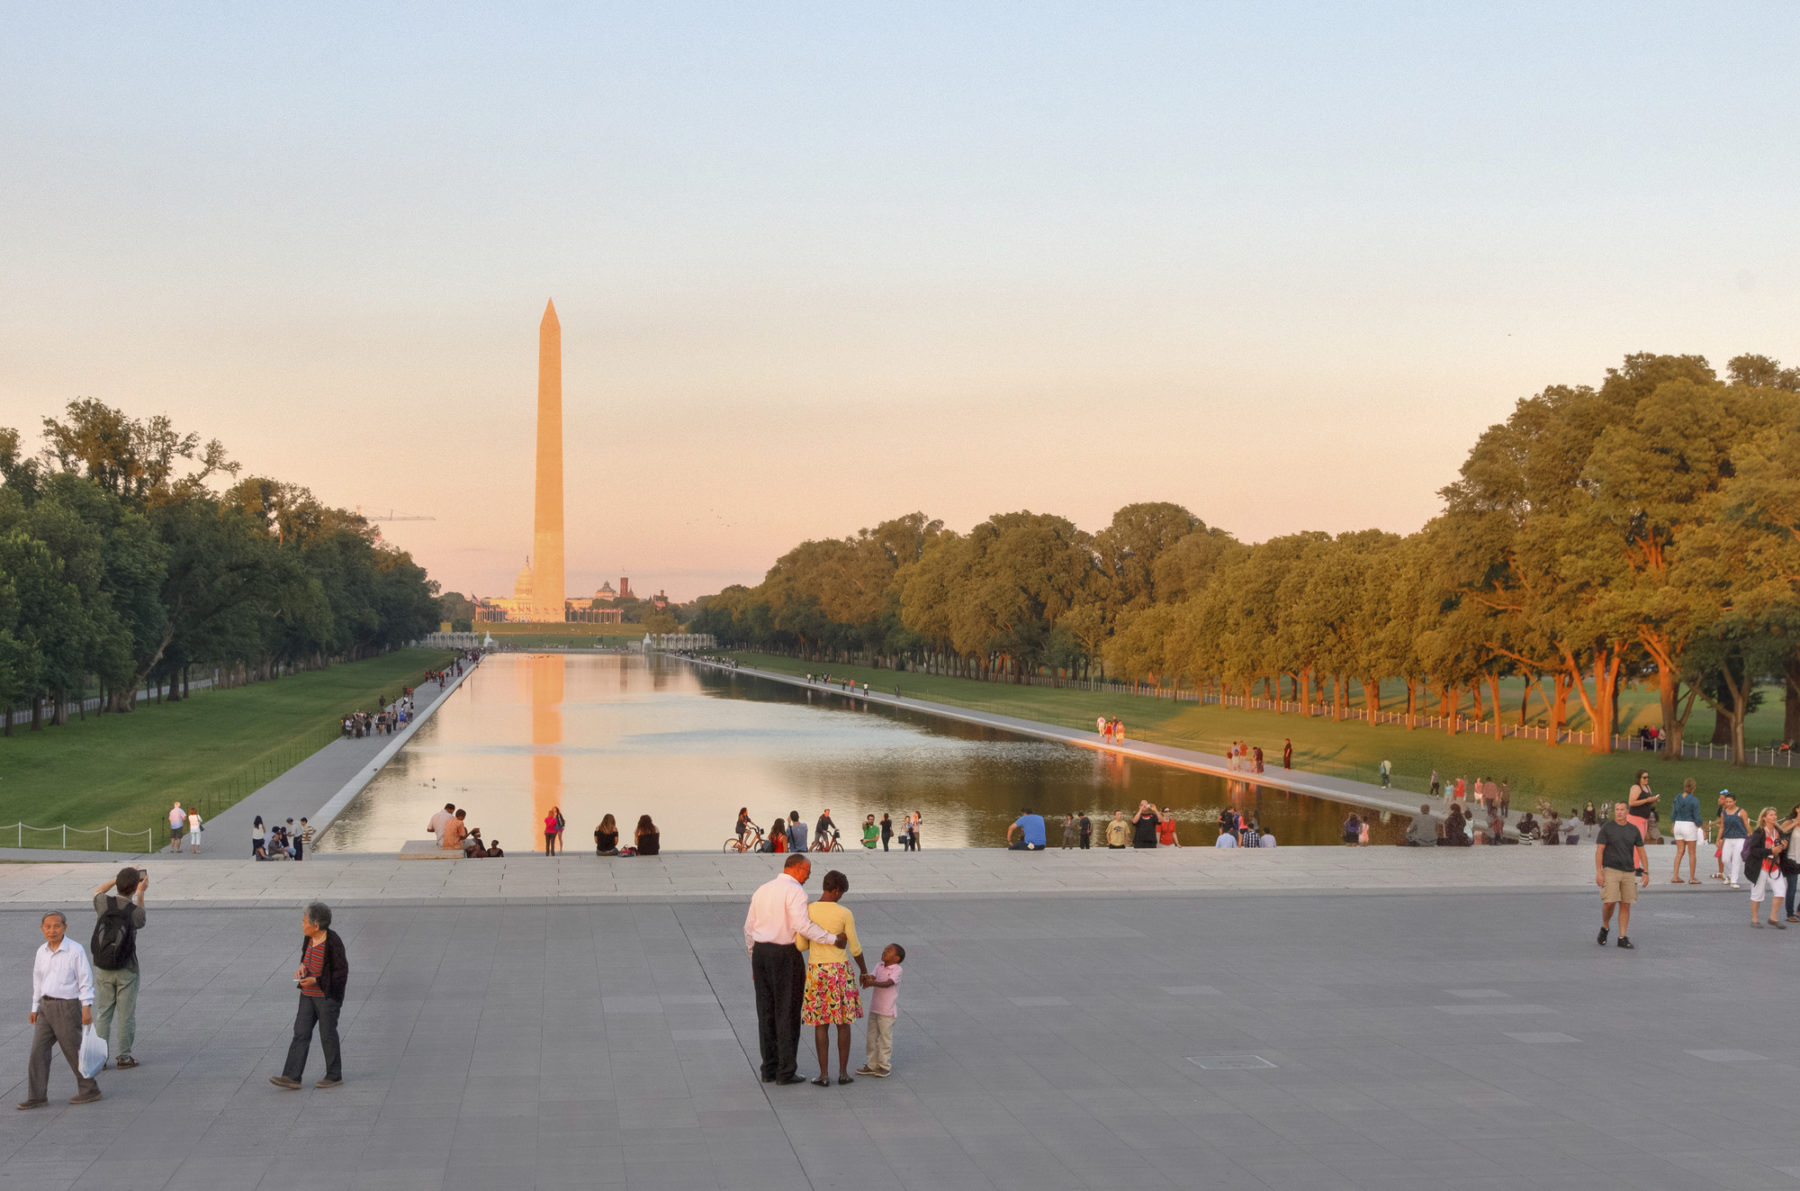 Lincoln Memorial (U.S. National Park Service)